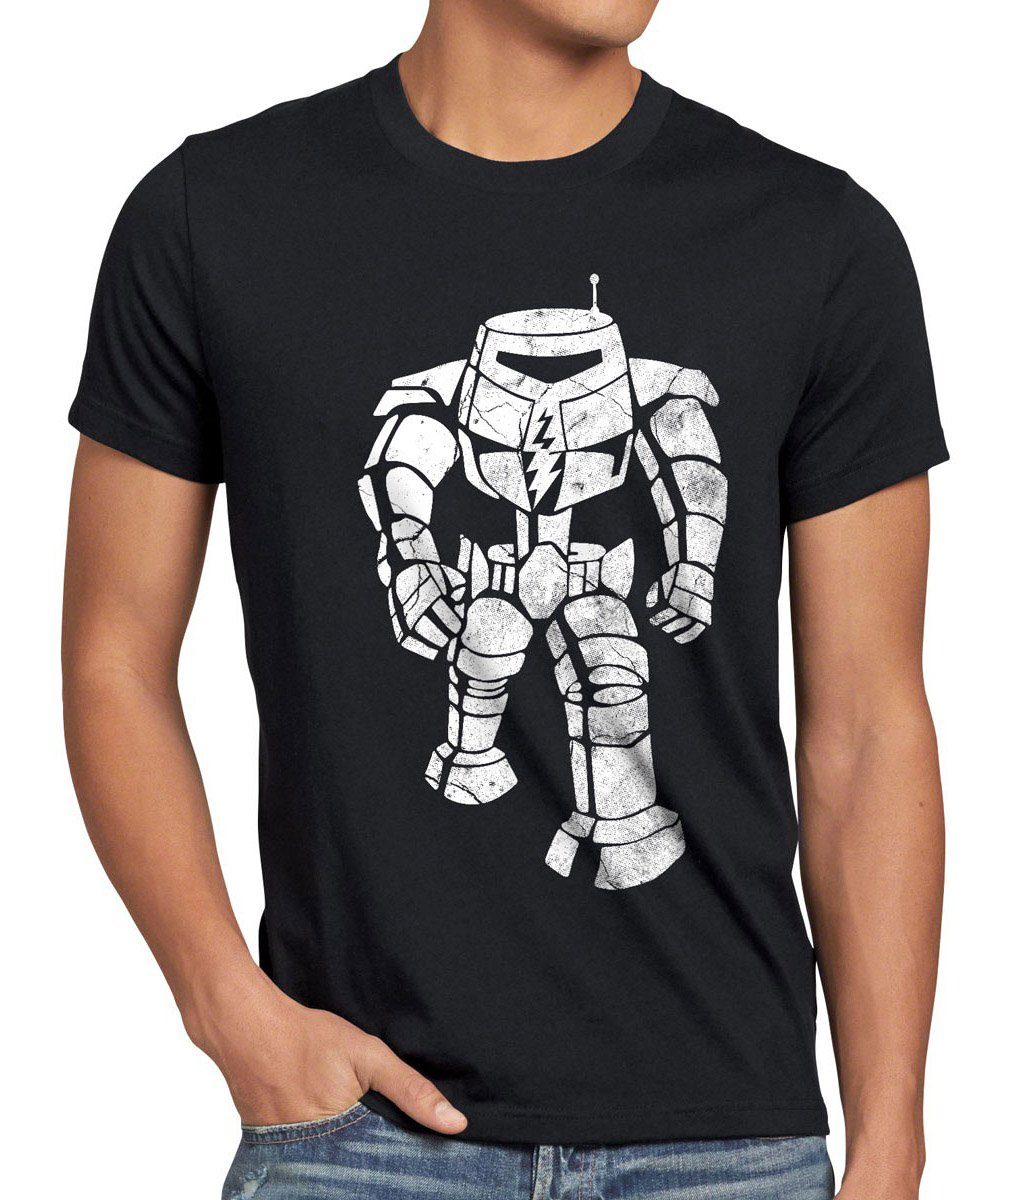 held Print-Shirt style3 Herren T-Shirt The Roboter Sheldon schwarz cooper Robot evolution bang big theory